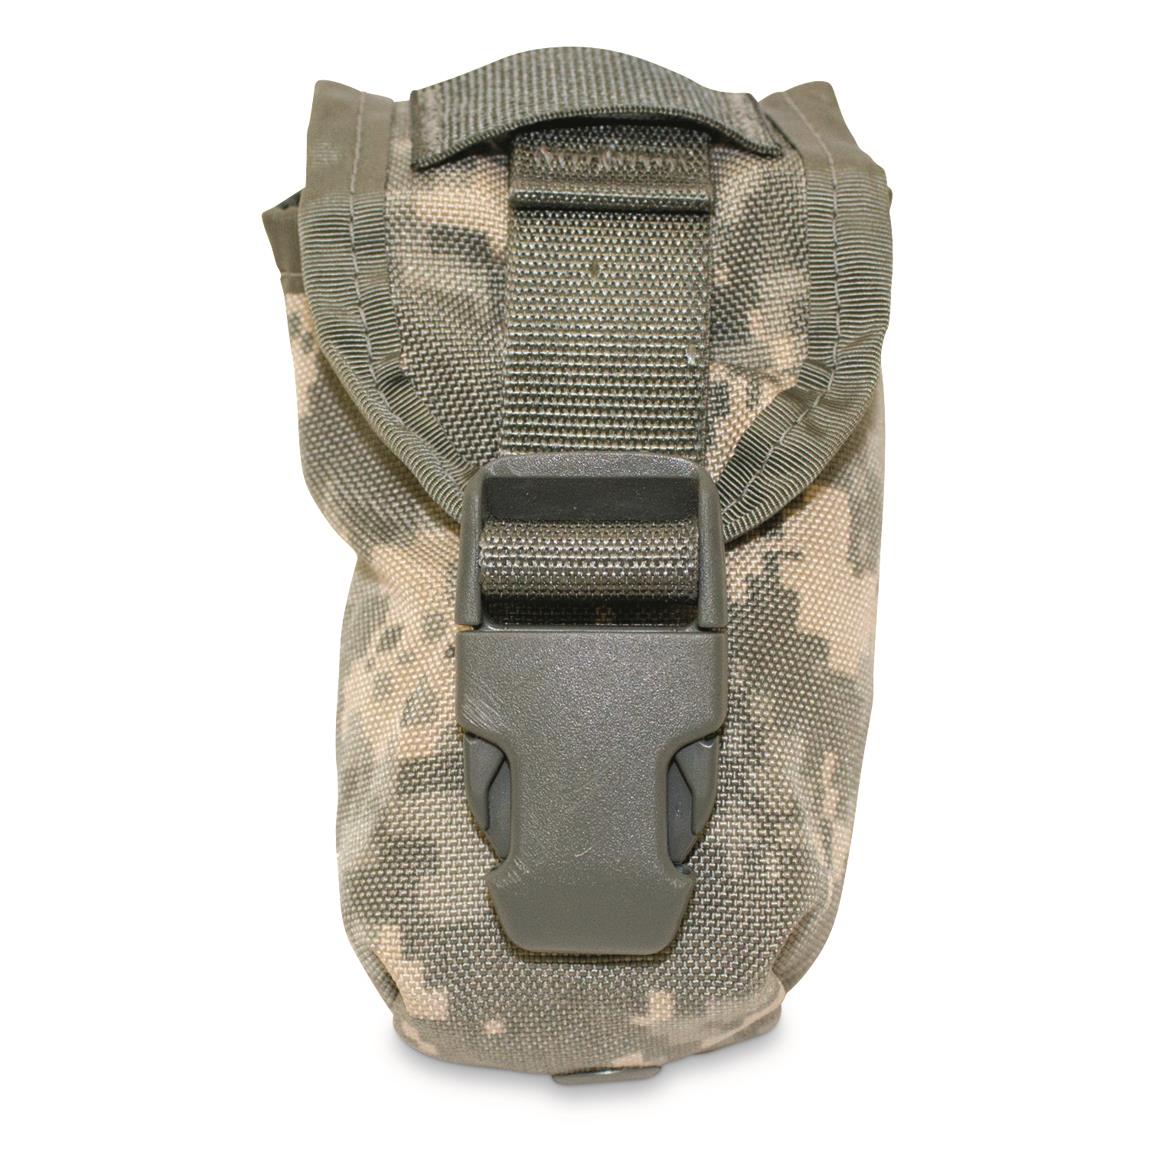 U.S. Military Surplus Flash Bang Grenade Pouch, 4 Pack, Used, ACU